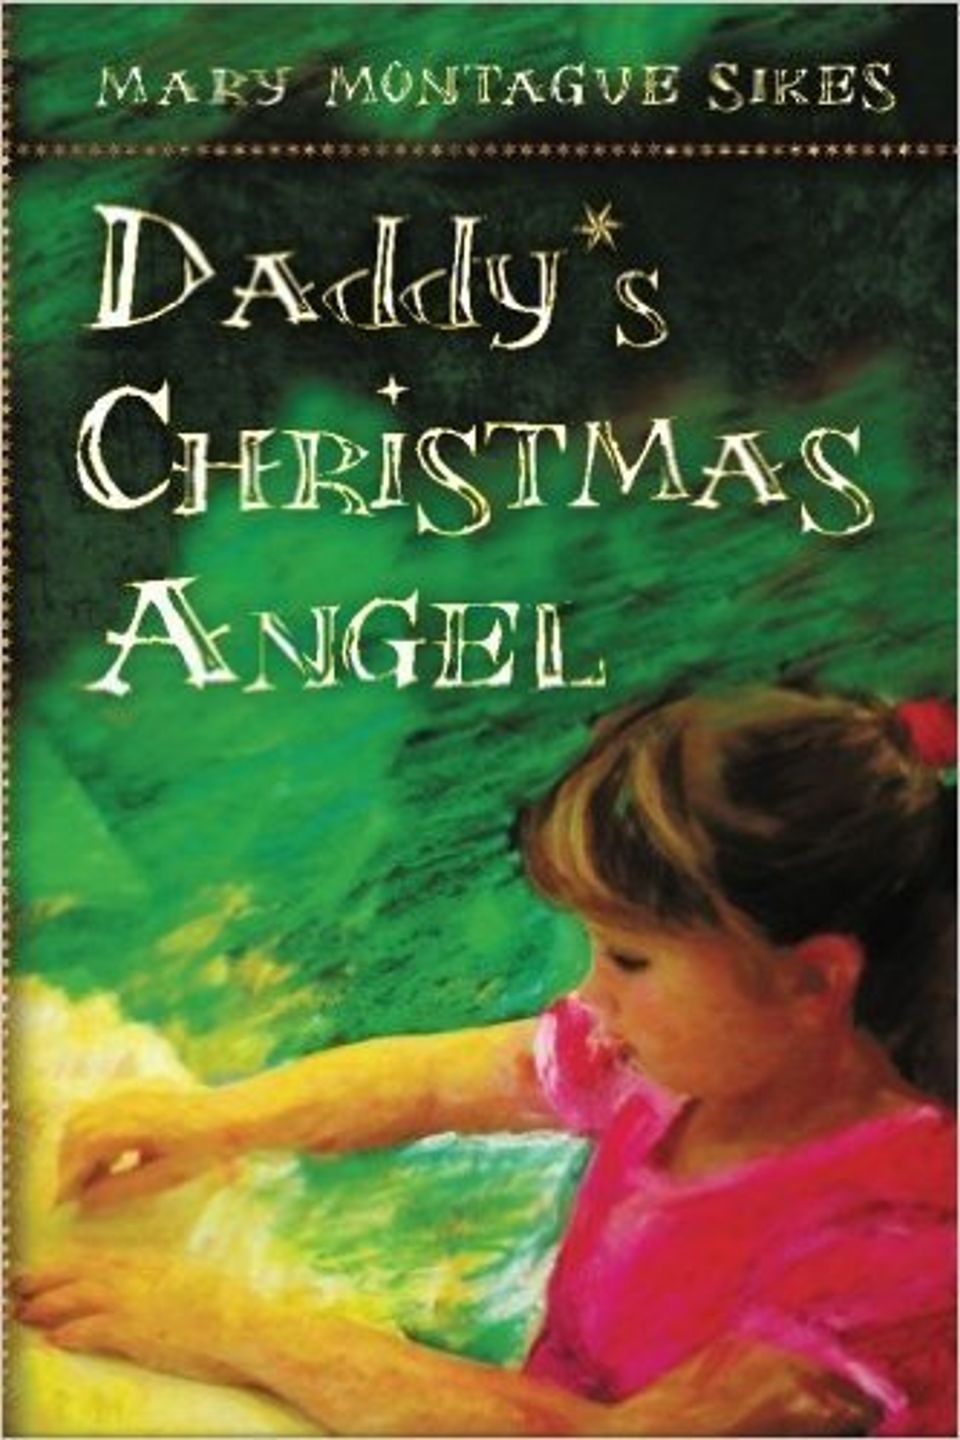 Daddy's christmas angel20160513 2463 wsasmh